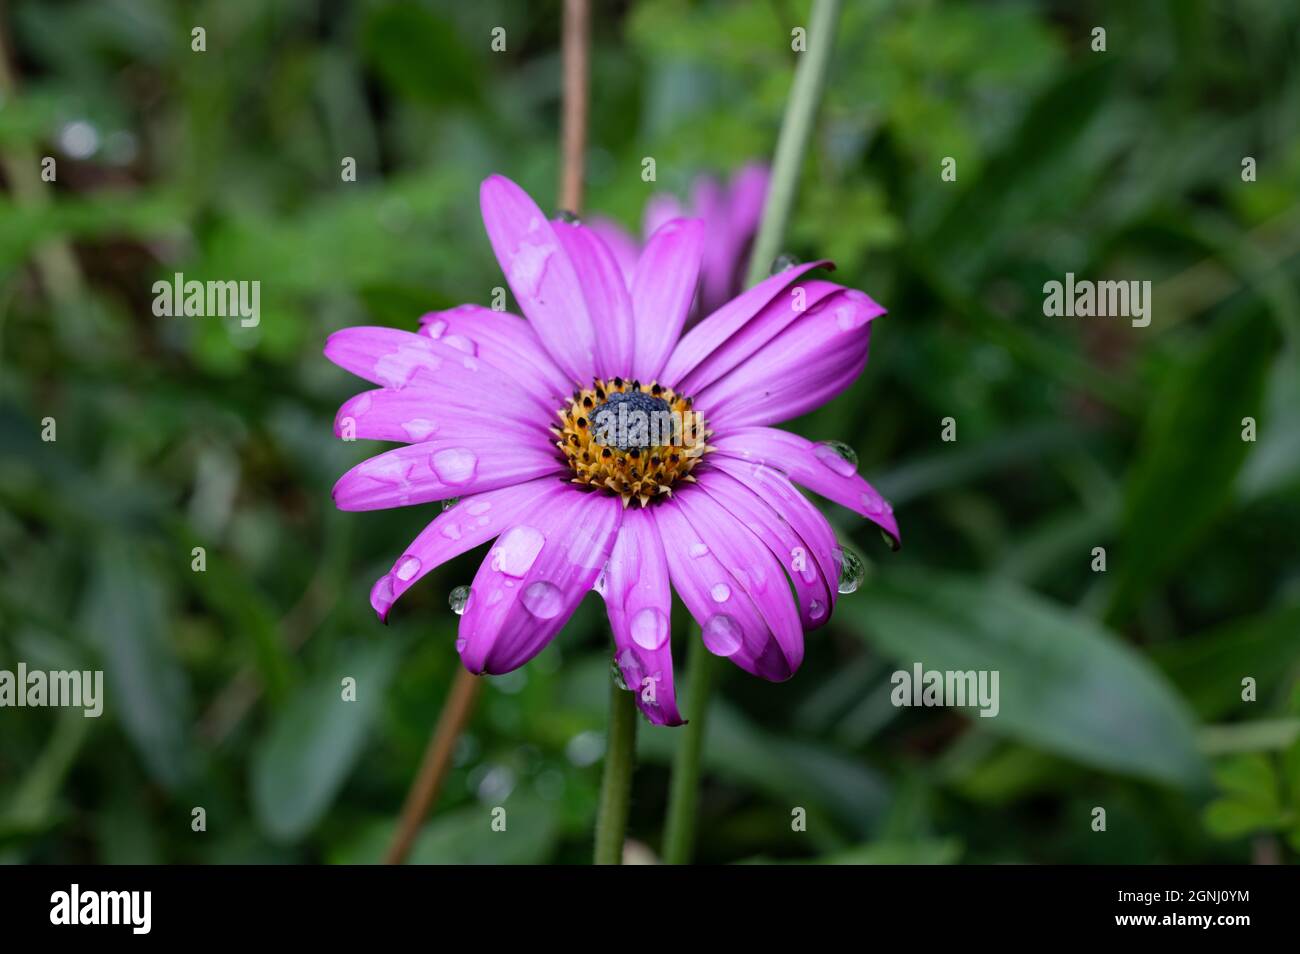 Rain drops on the petals of a purple flower Stock Photo